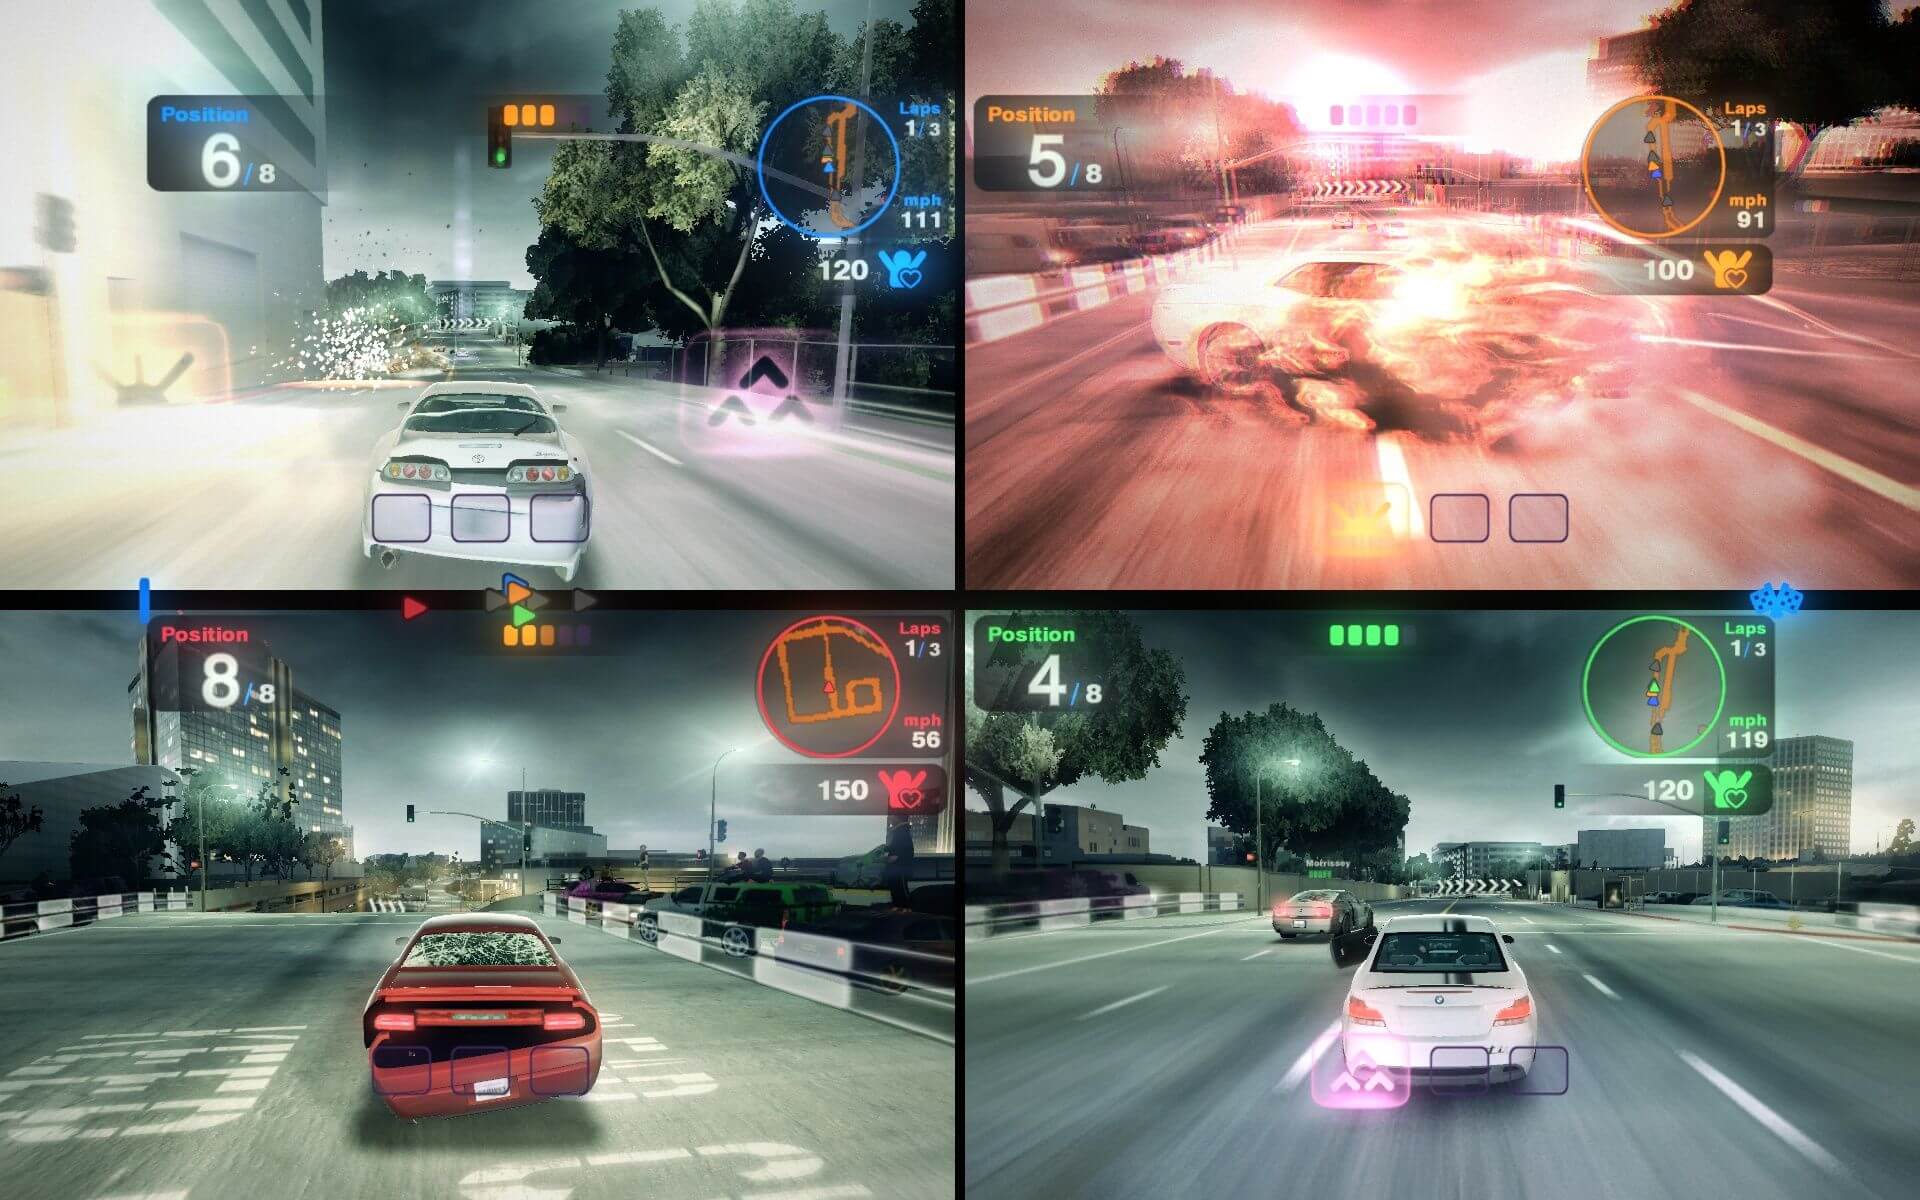 Blur- 4 players multiplayer splitscreen 